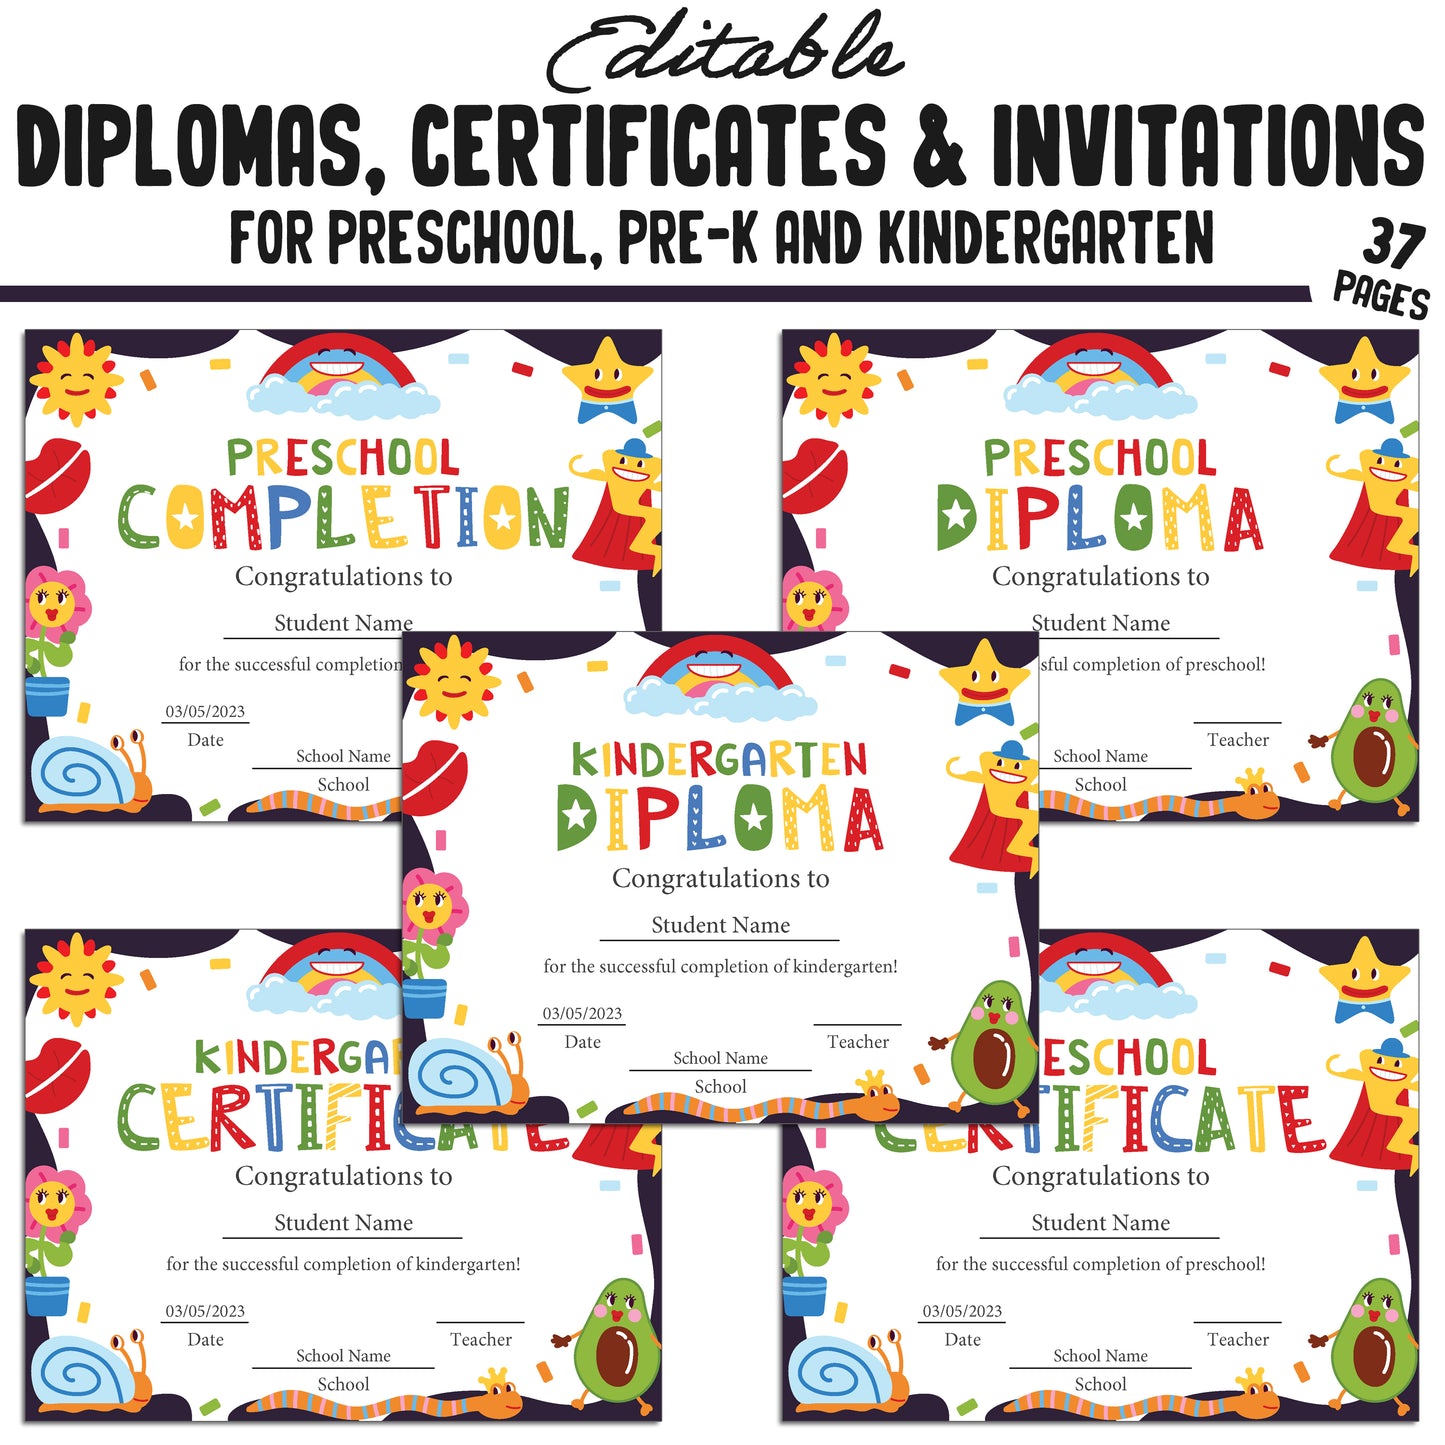 37 Printable Pre-K, Kindergarten, and Preschool Diplomas, Certificates, and Invitation Templates (PDF Files) - Instant Download